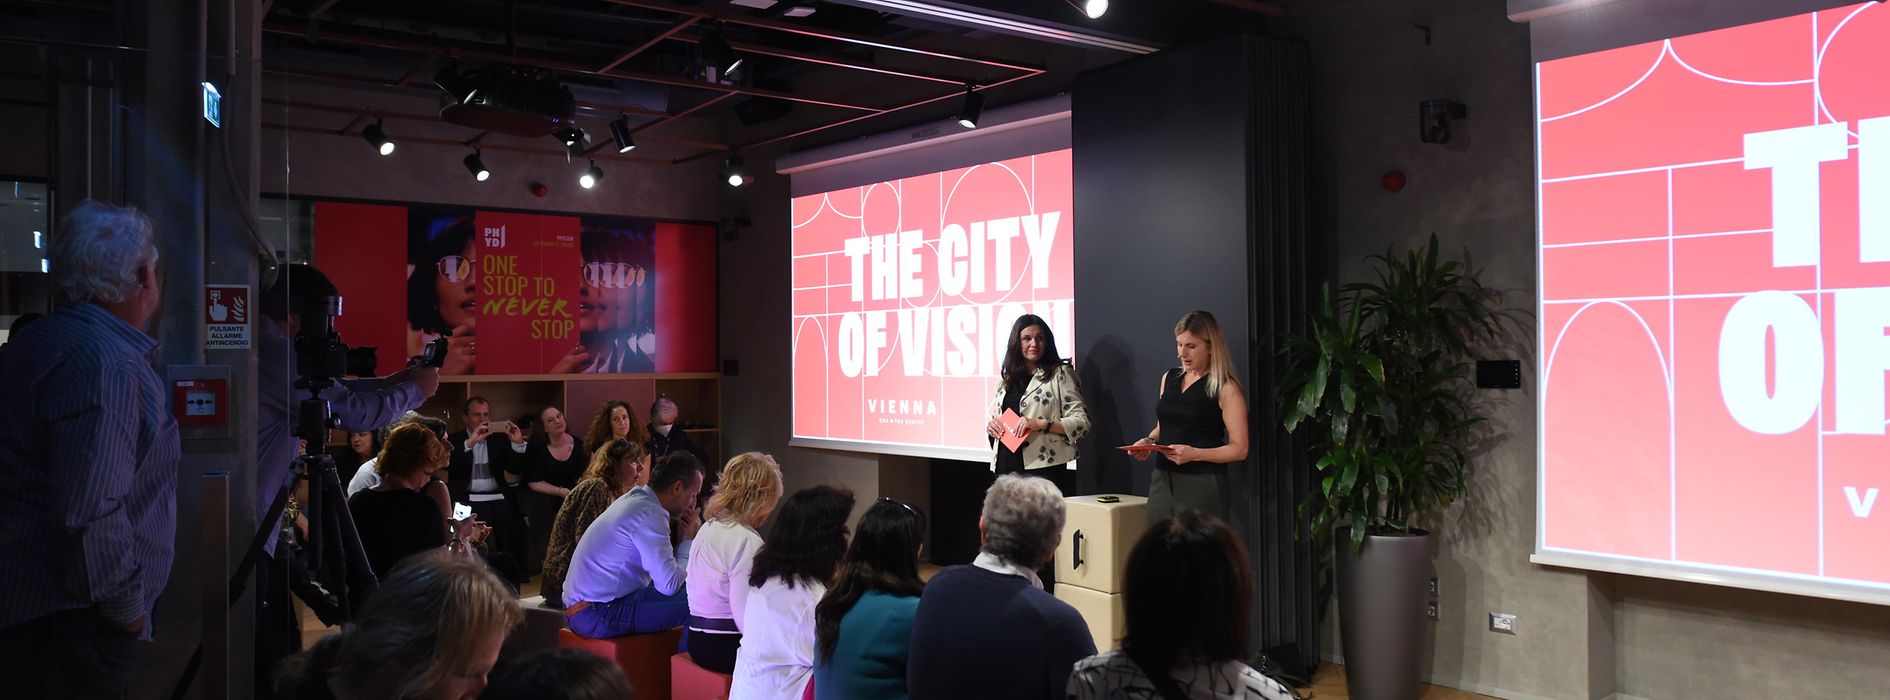 Präsentation von The City of Vision beim B2B Highlight Event Mailand